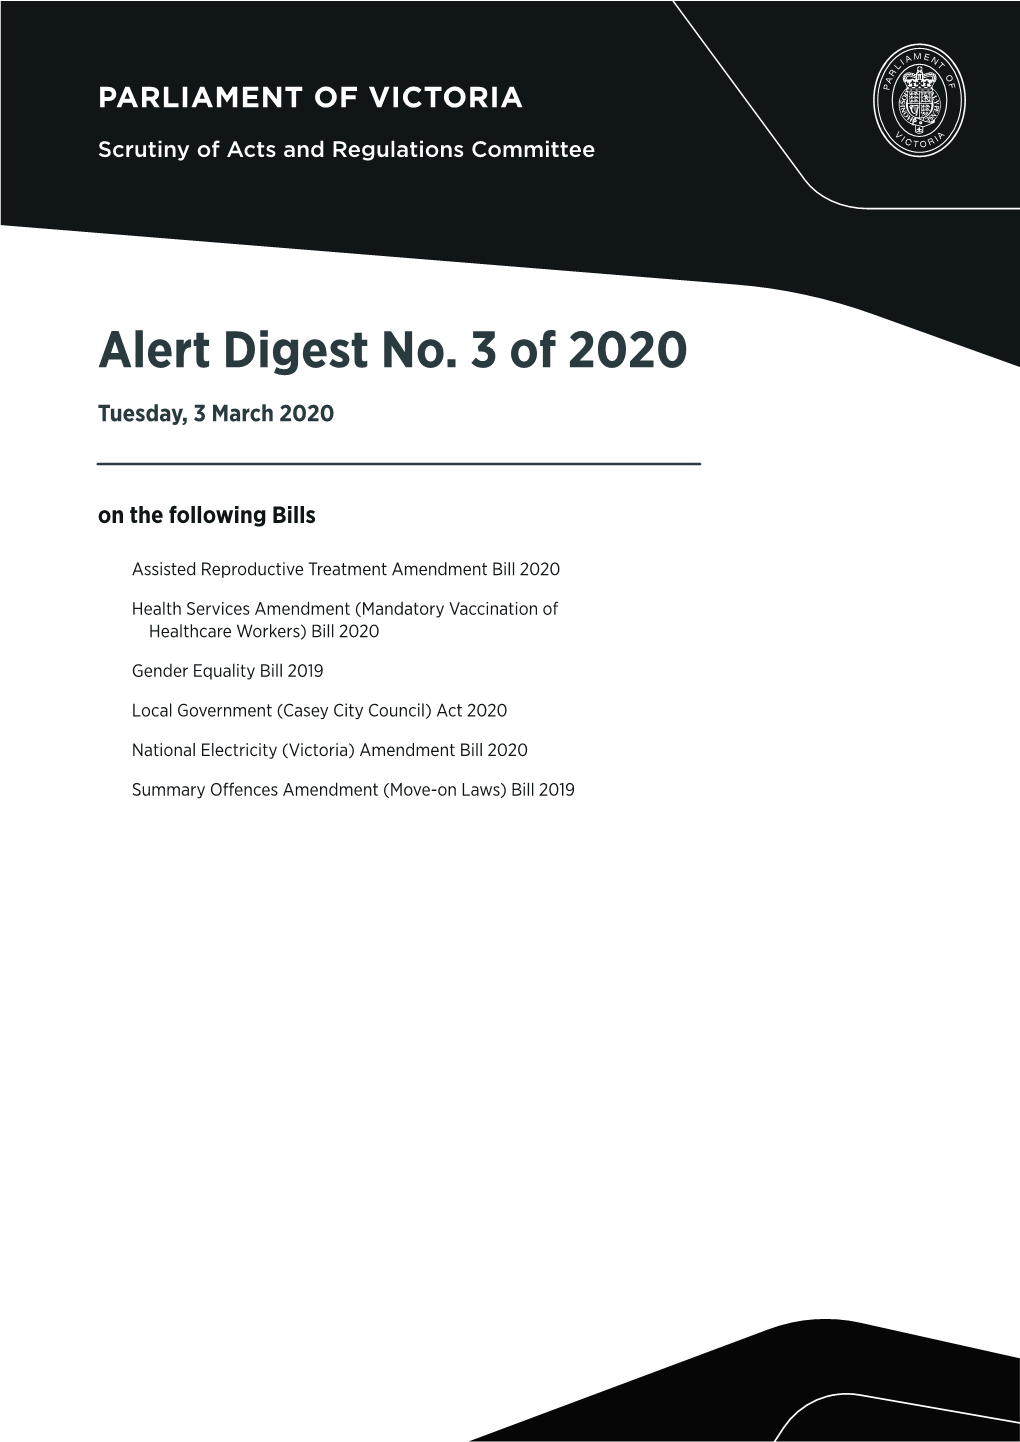 Alert Digest No. 3 of 2020